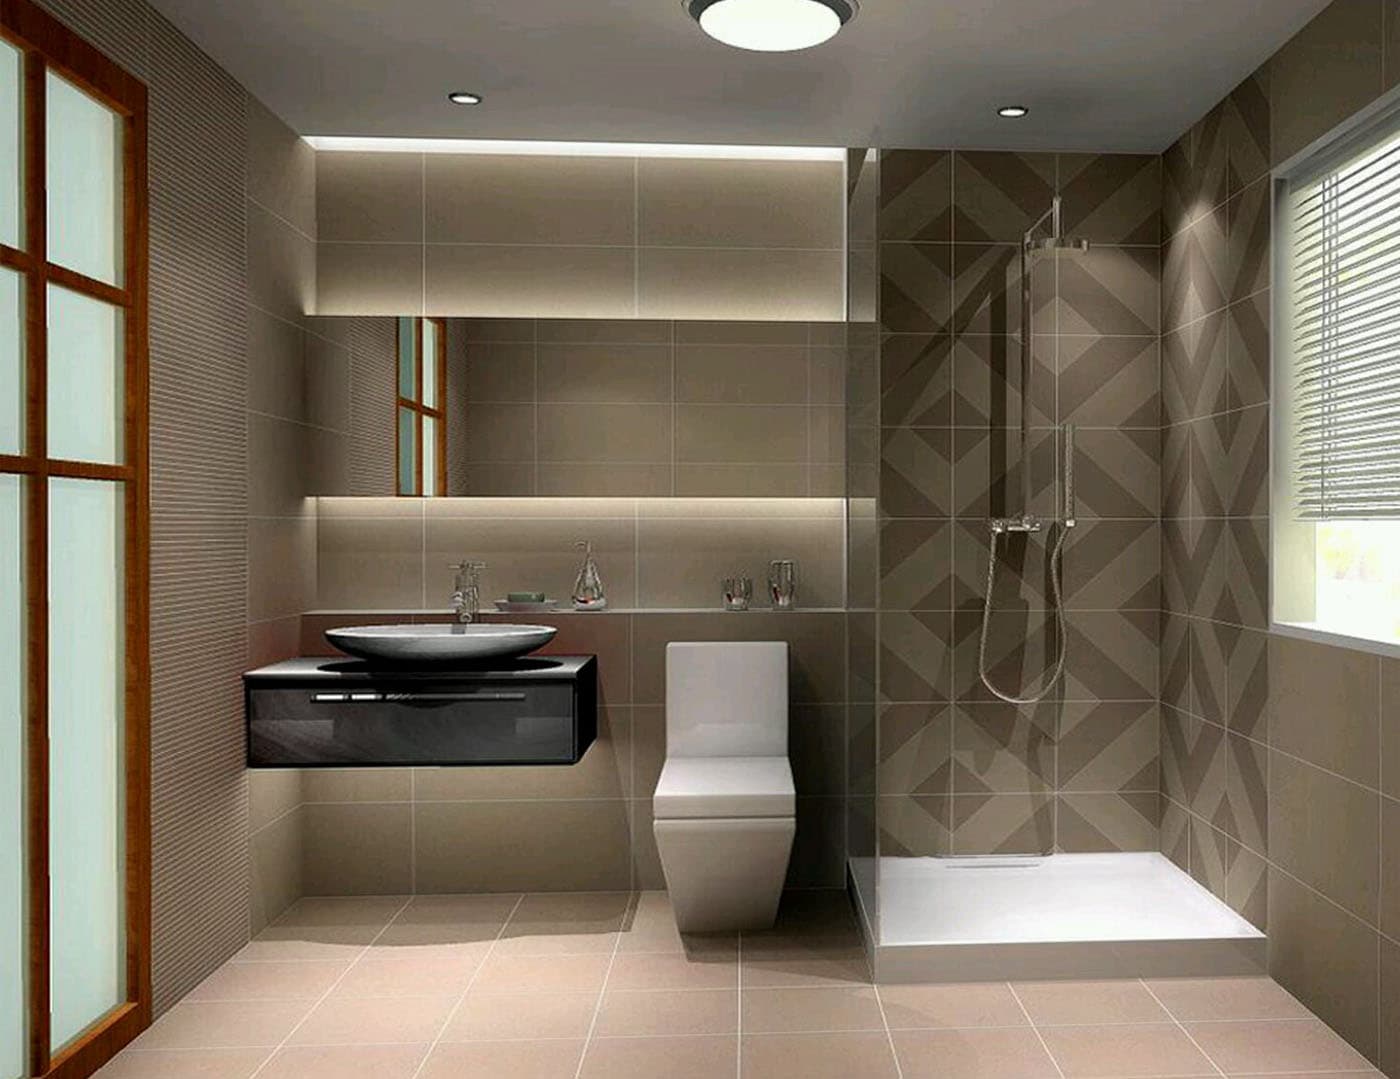 Ванная комната - дешево и красиво своими руками: дизайн, фото